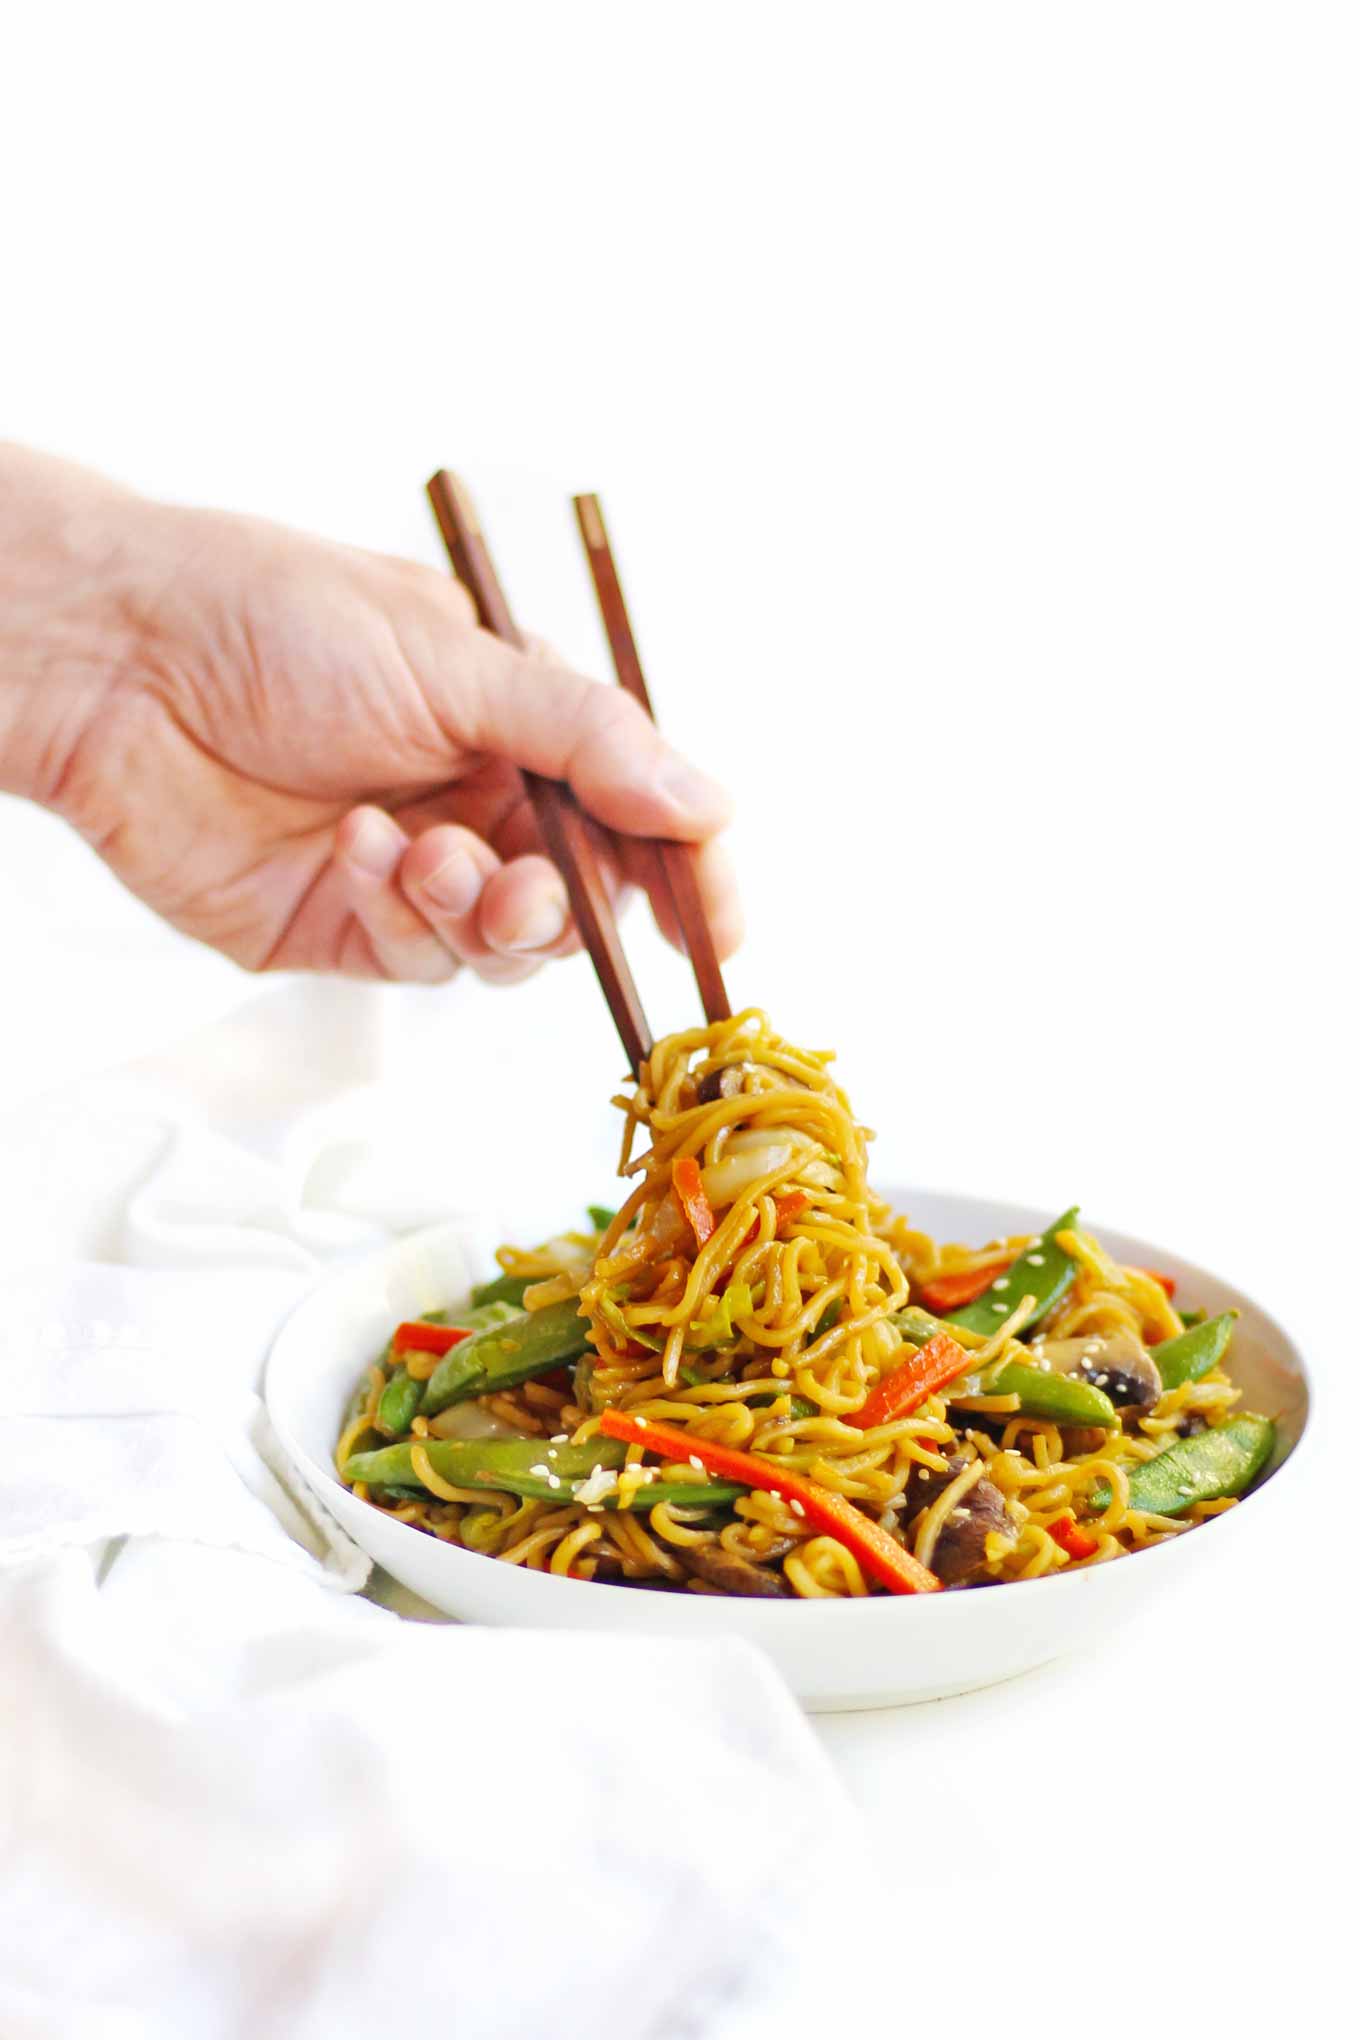 stir fry noodles being eaten with chopsticks